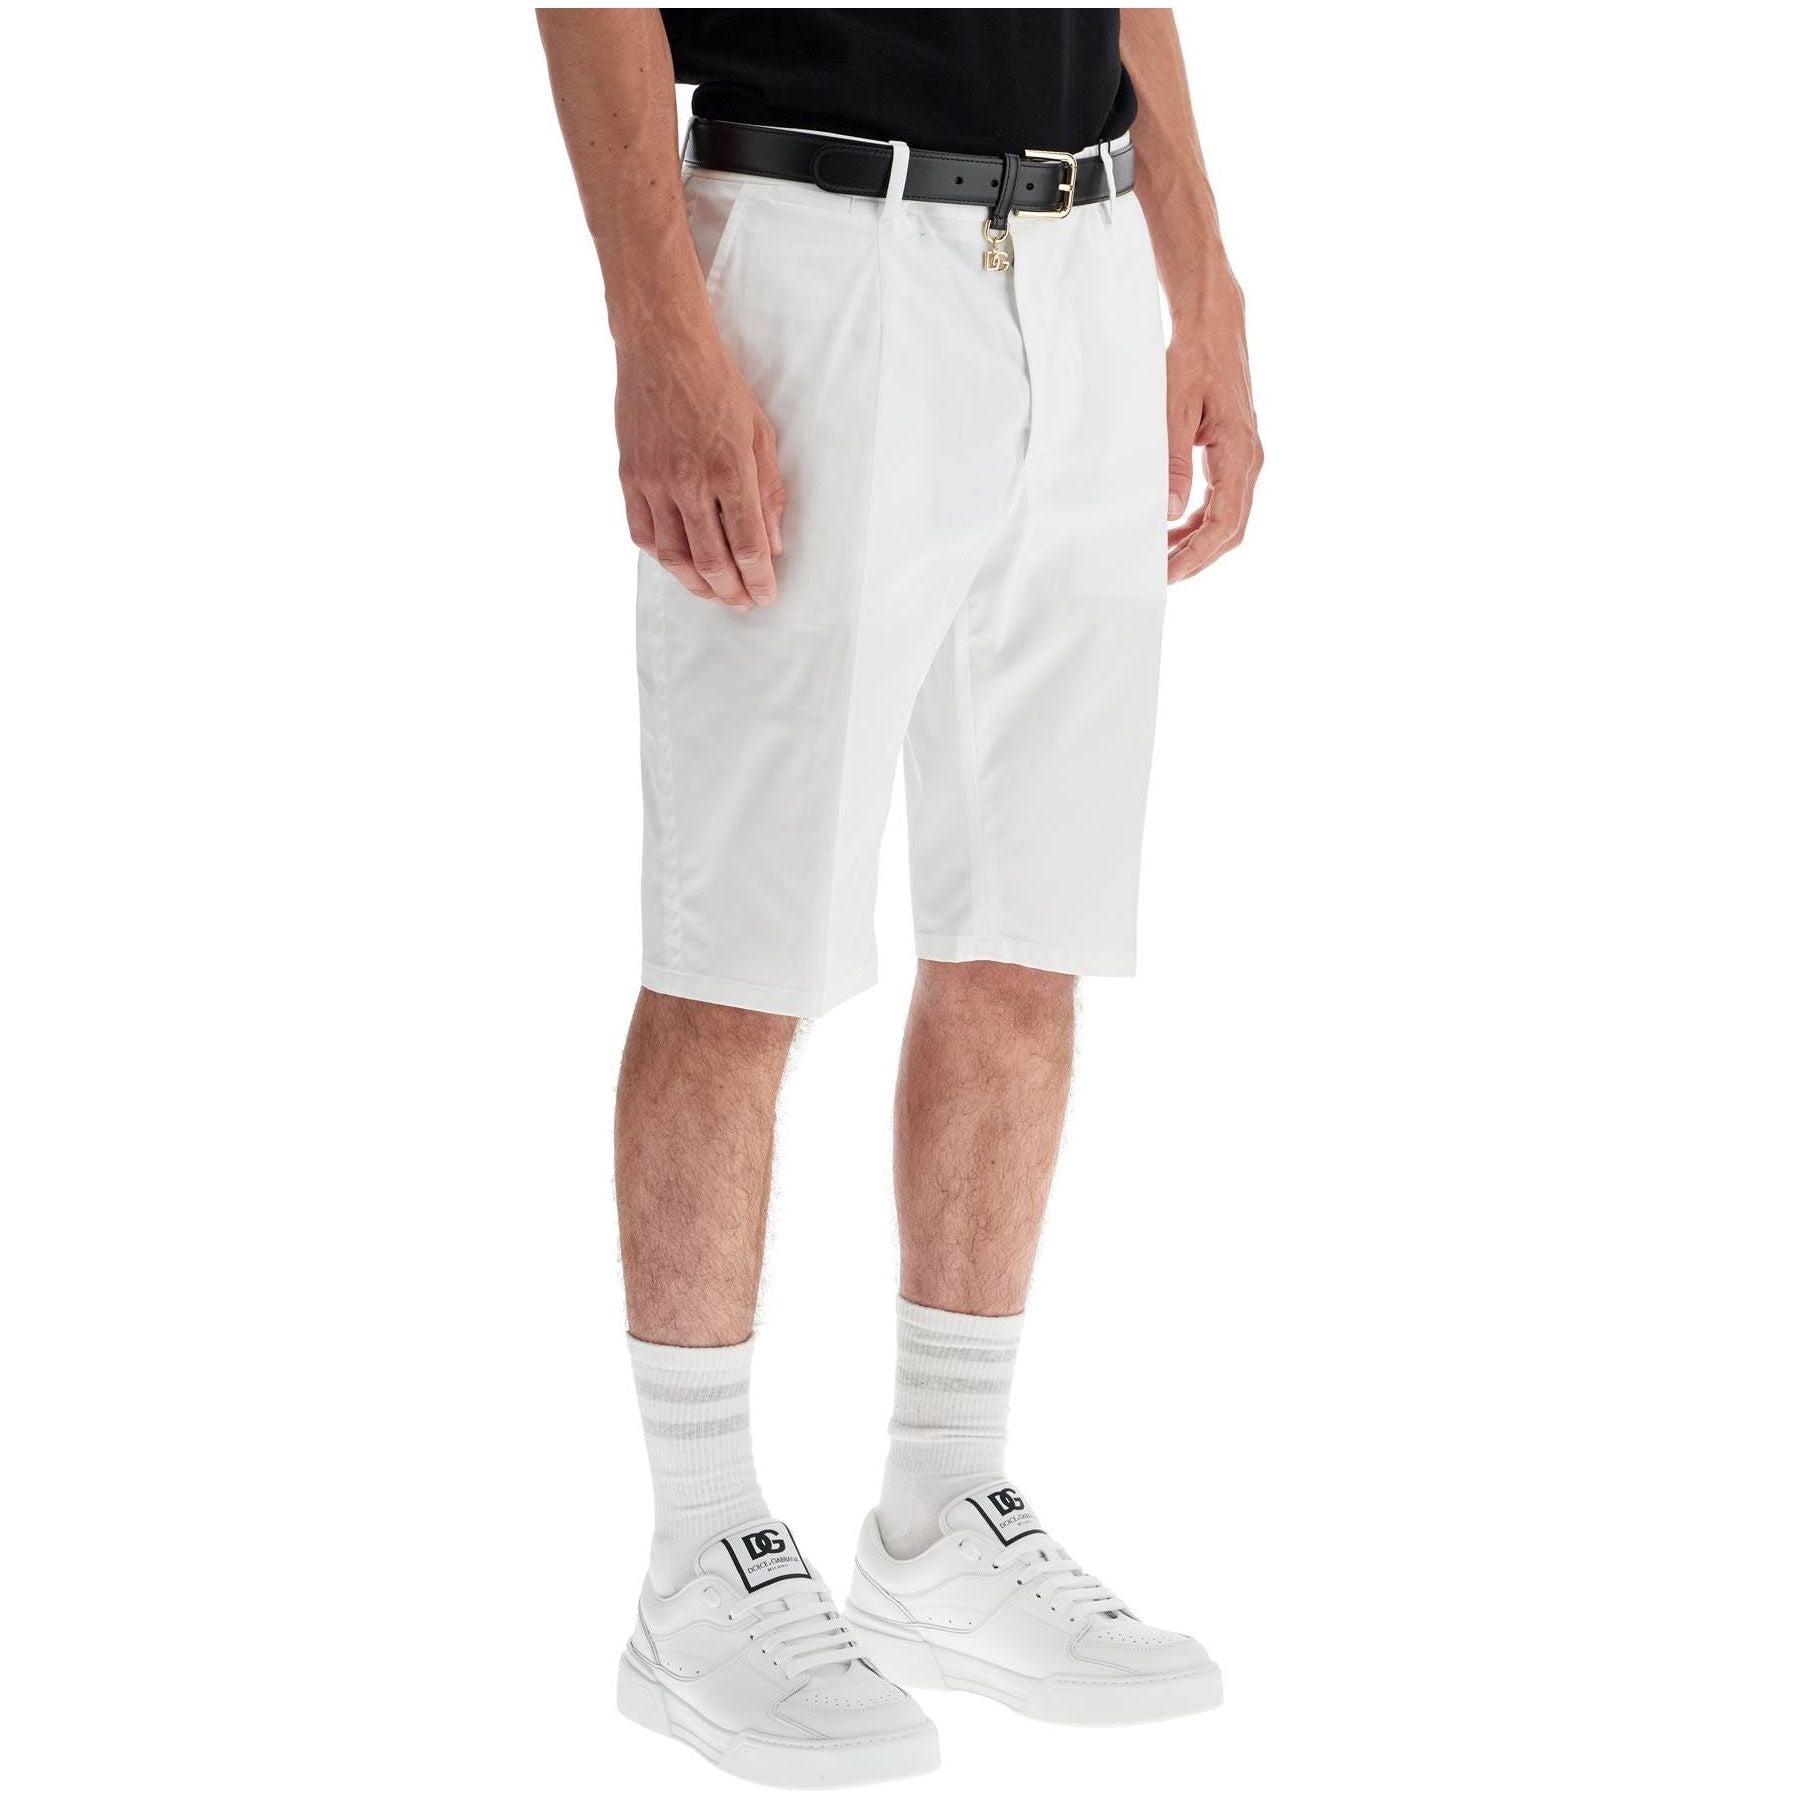 Stretch Cotton Shorts